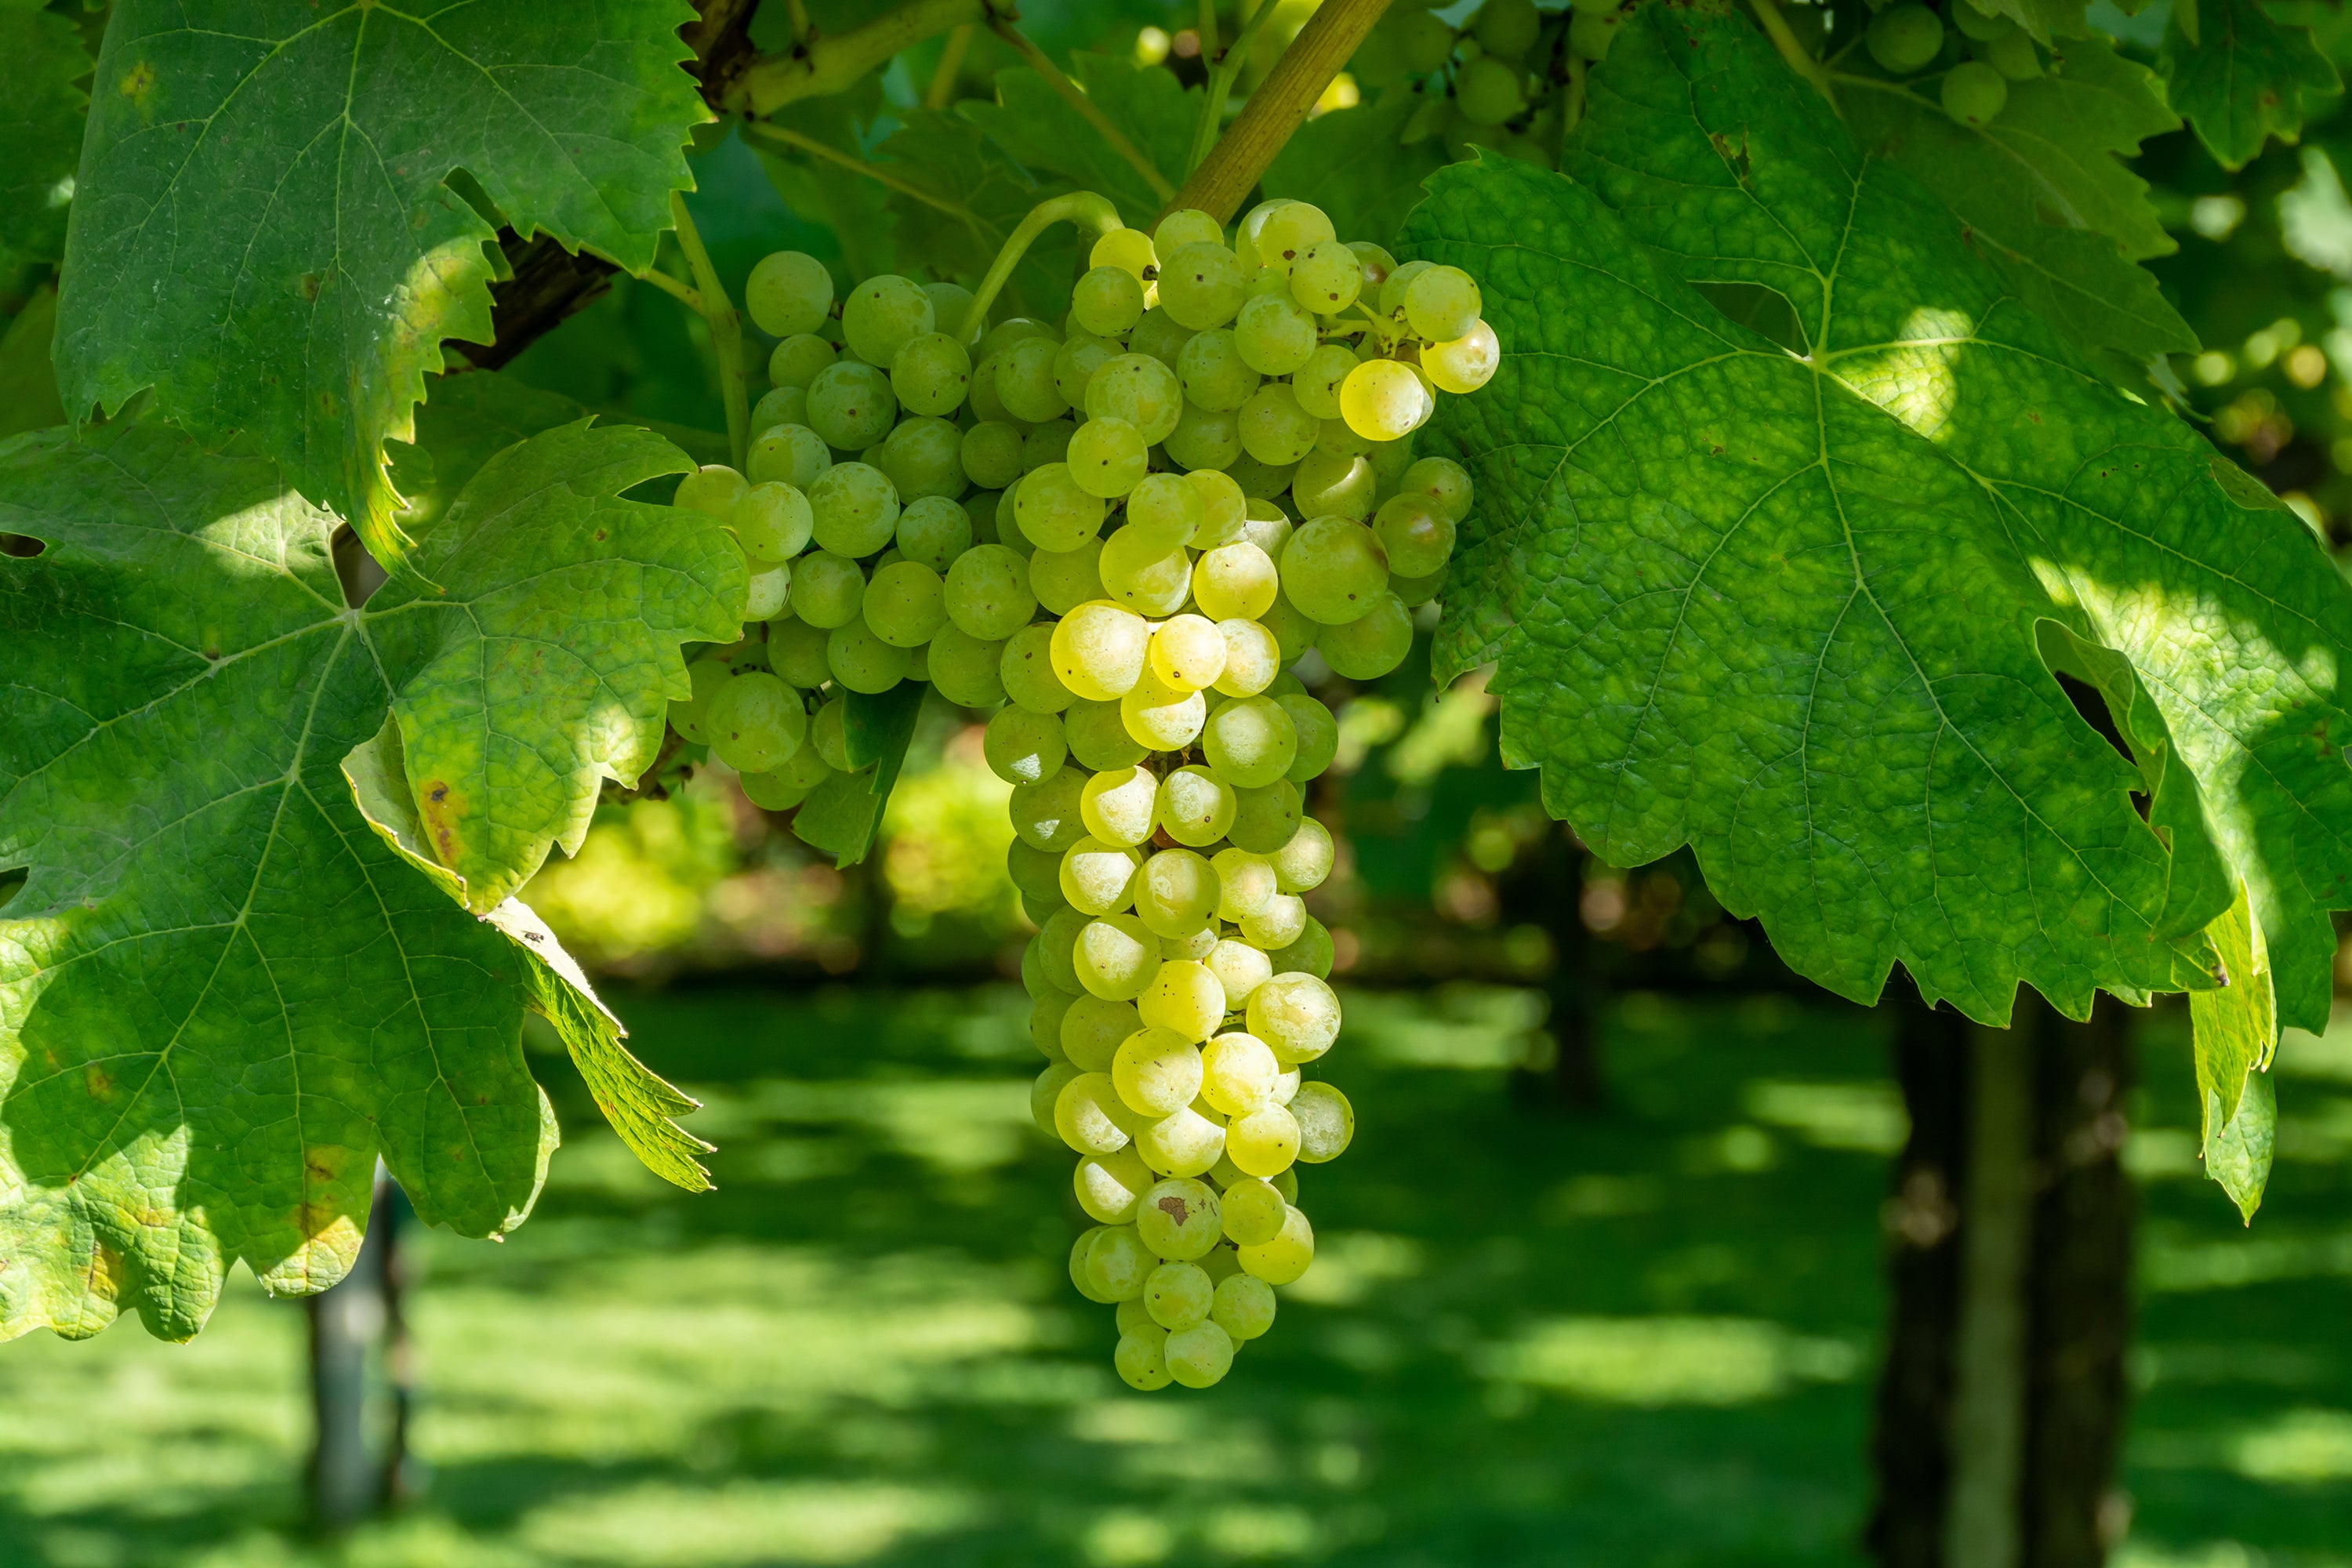 Green grapes used to make balsamic vinegar.